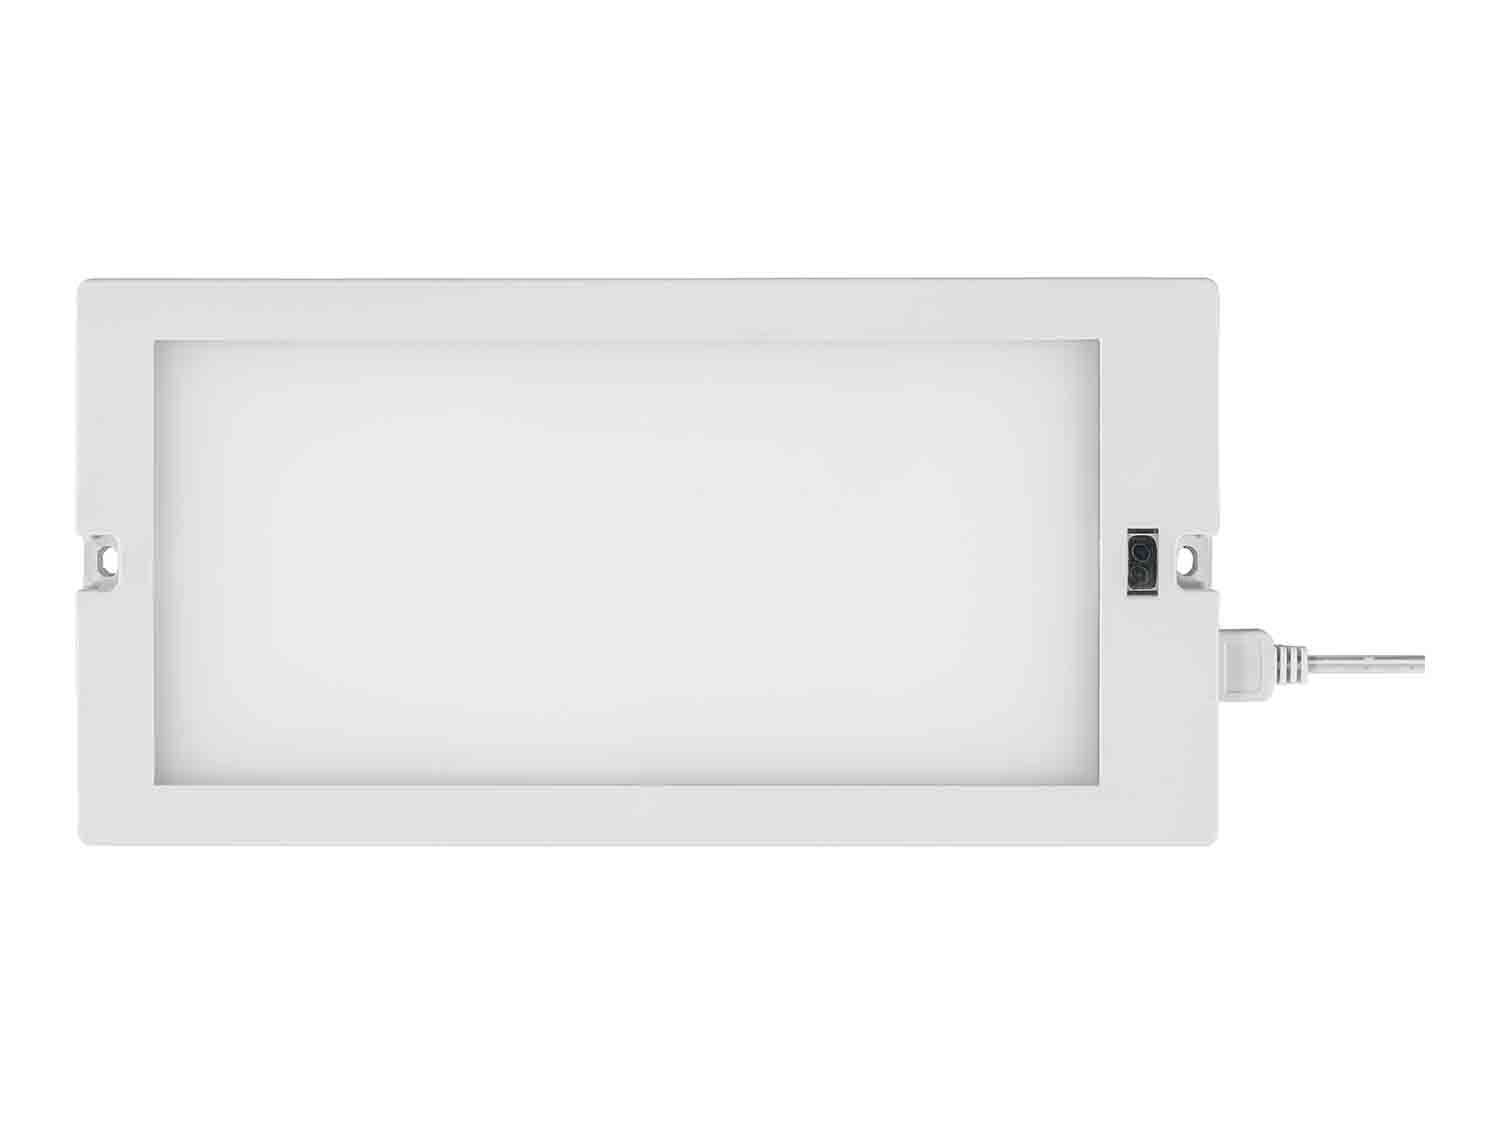 Lámpara panel LED bajo mueble